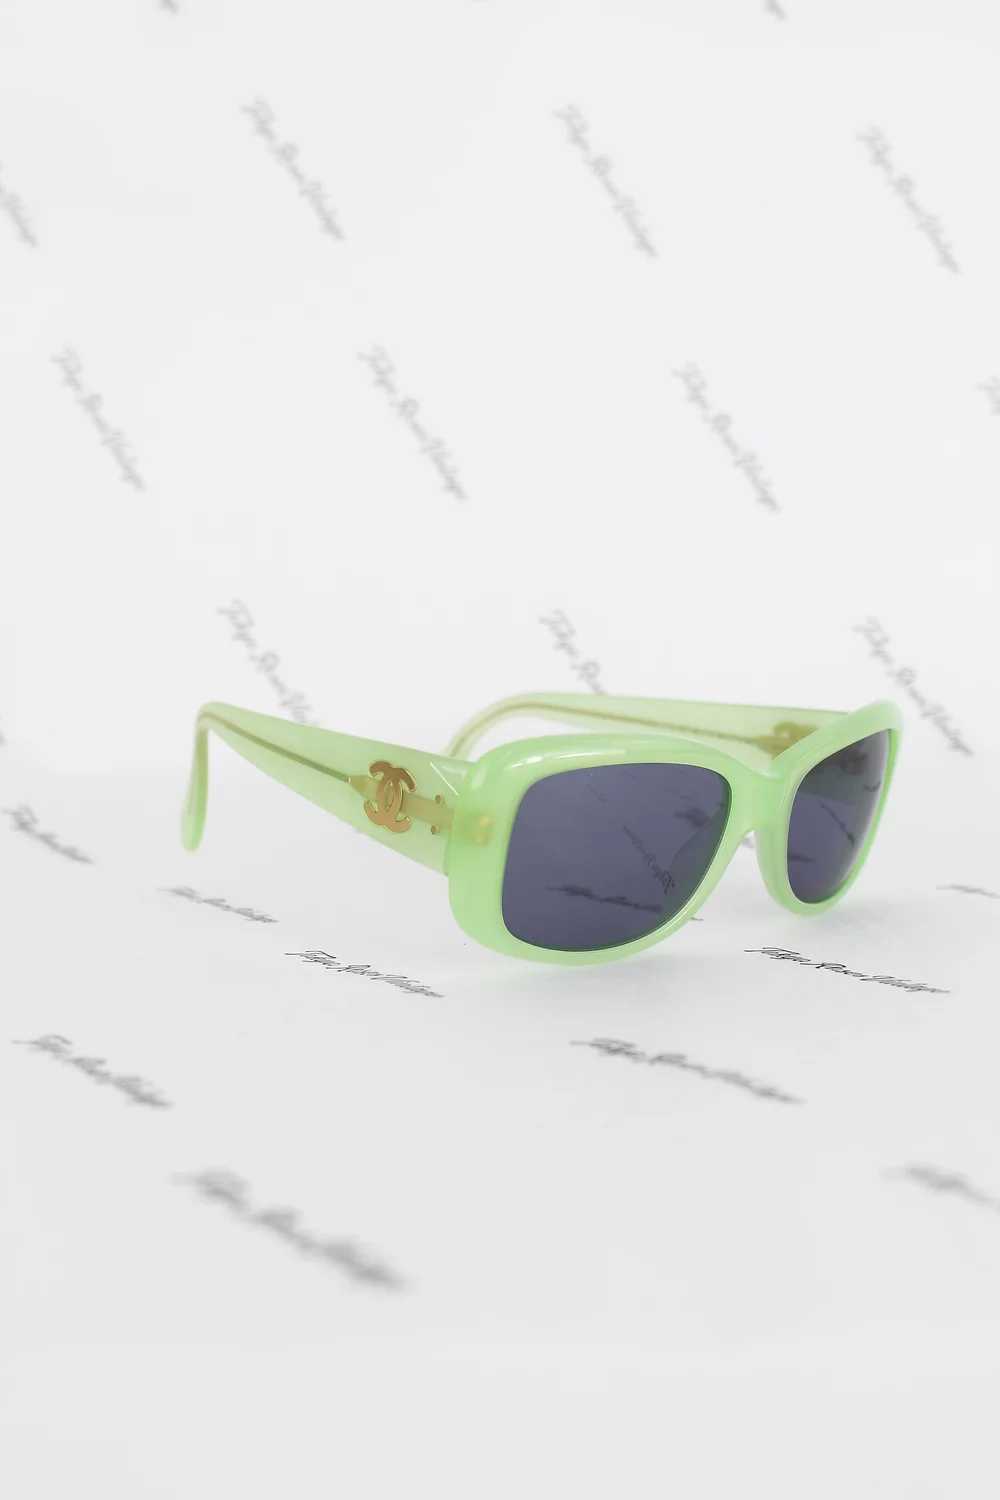 Vintage Chanel Neon Green Frame Sunglasses Logo Glass… - Gem